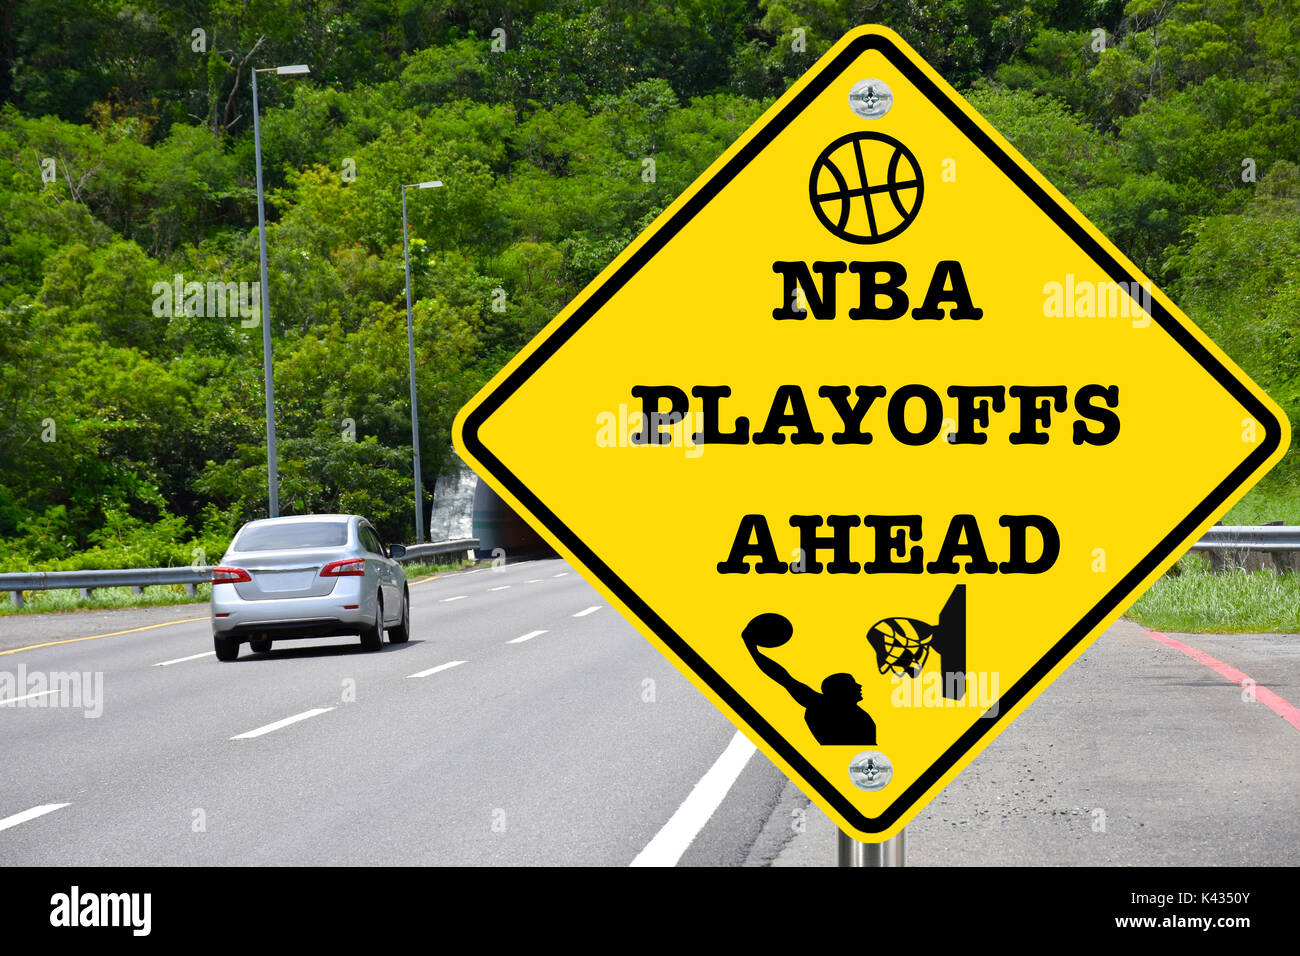 NBA playoffs ahead, yellow warning street sign Stock Photo